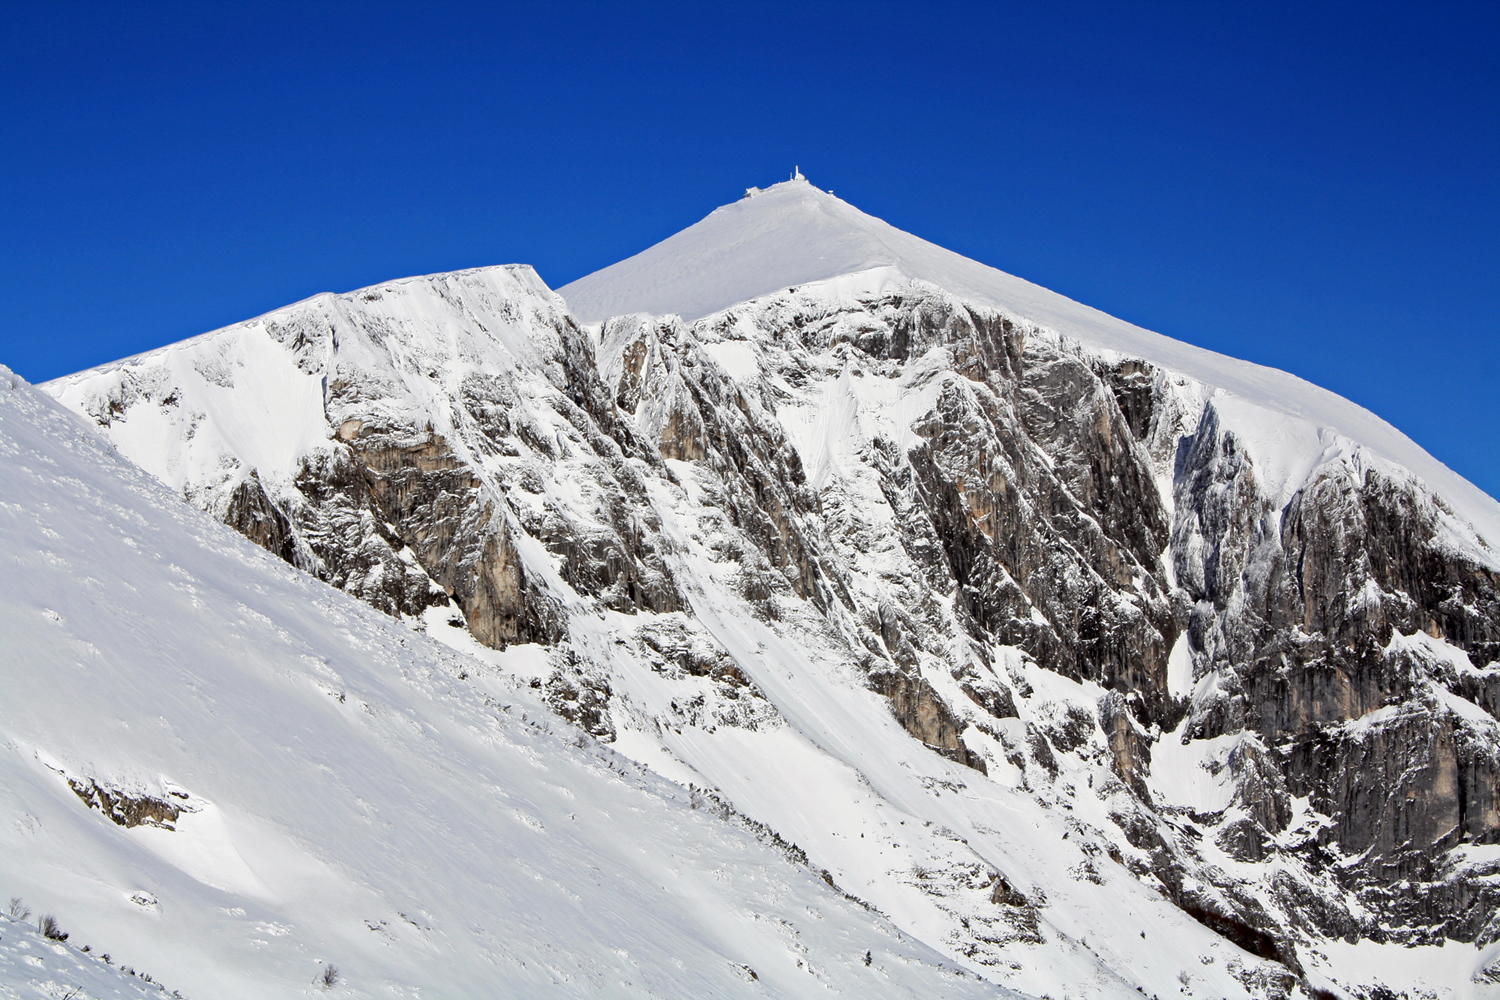 Solunska Glava Peak, Jakupica Mountain